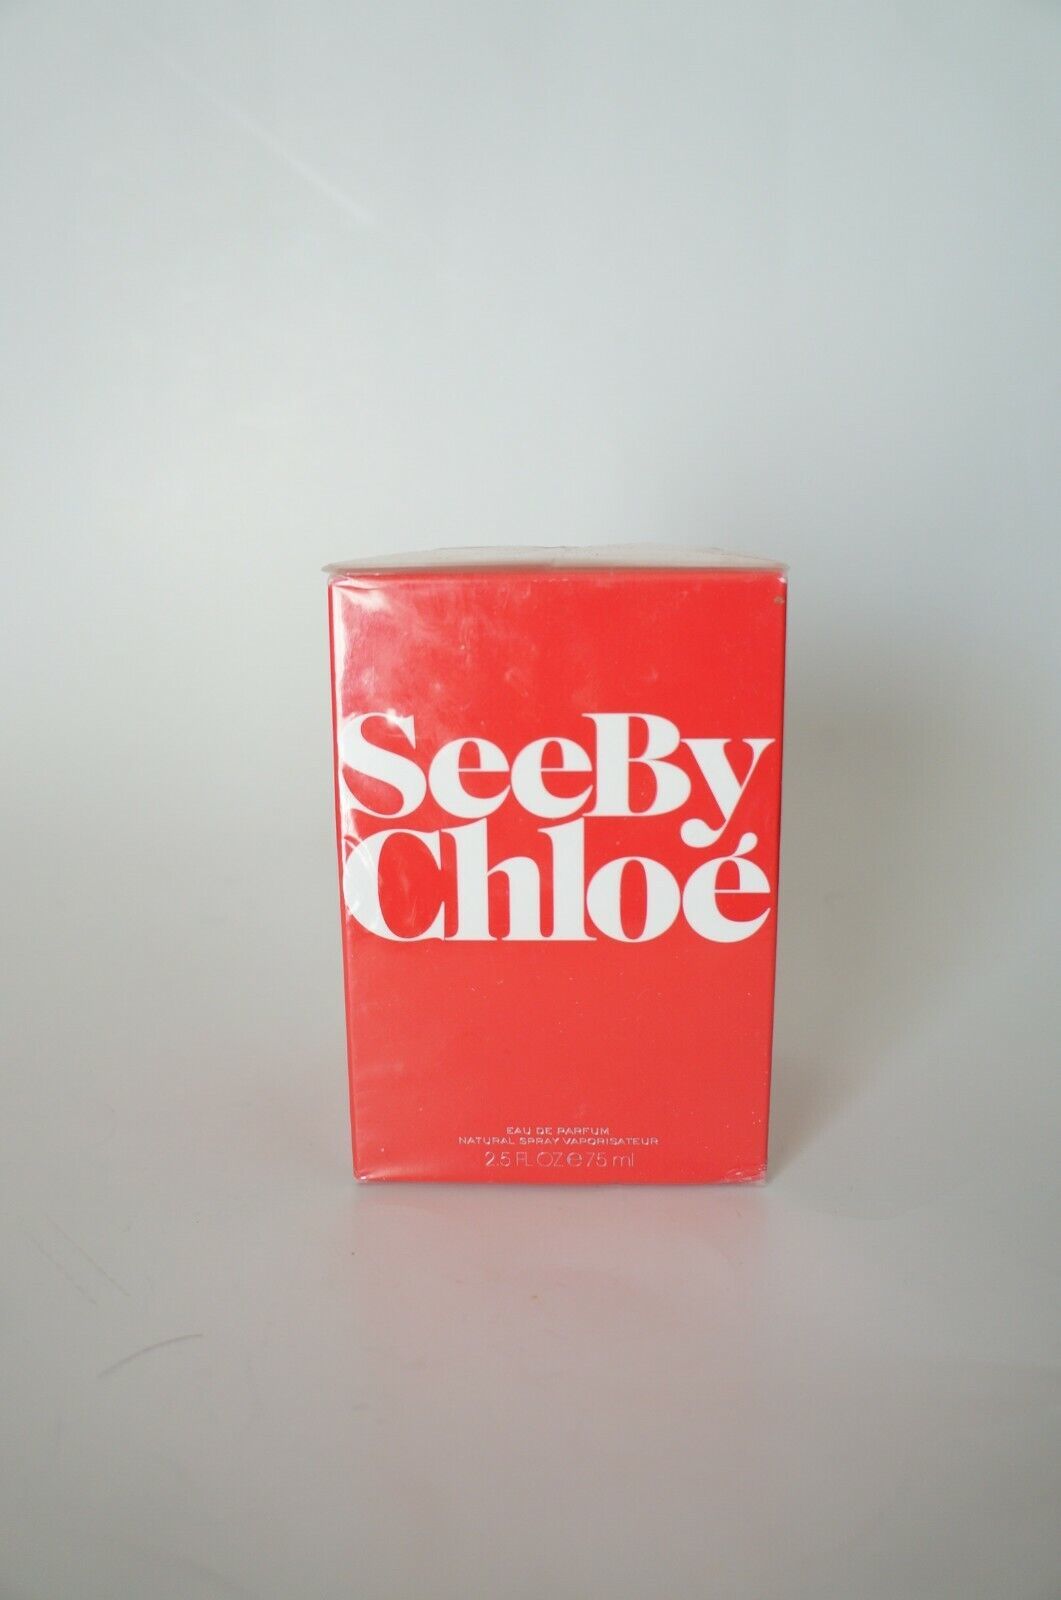 SEE BY CHLOE BY CHLOE 2.5OZ EDP WOMEN PERFUME SPRAY SEALED 100% AUTHENTIC - $346.49